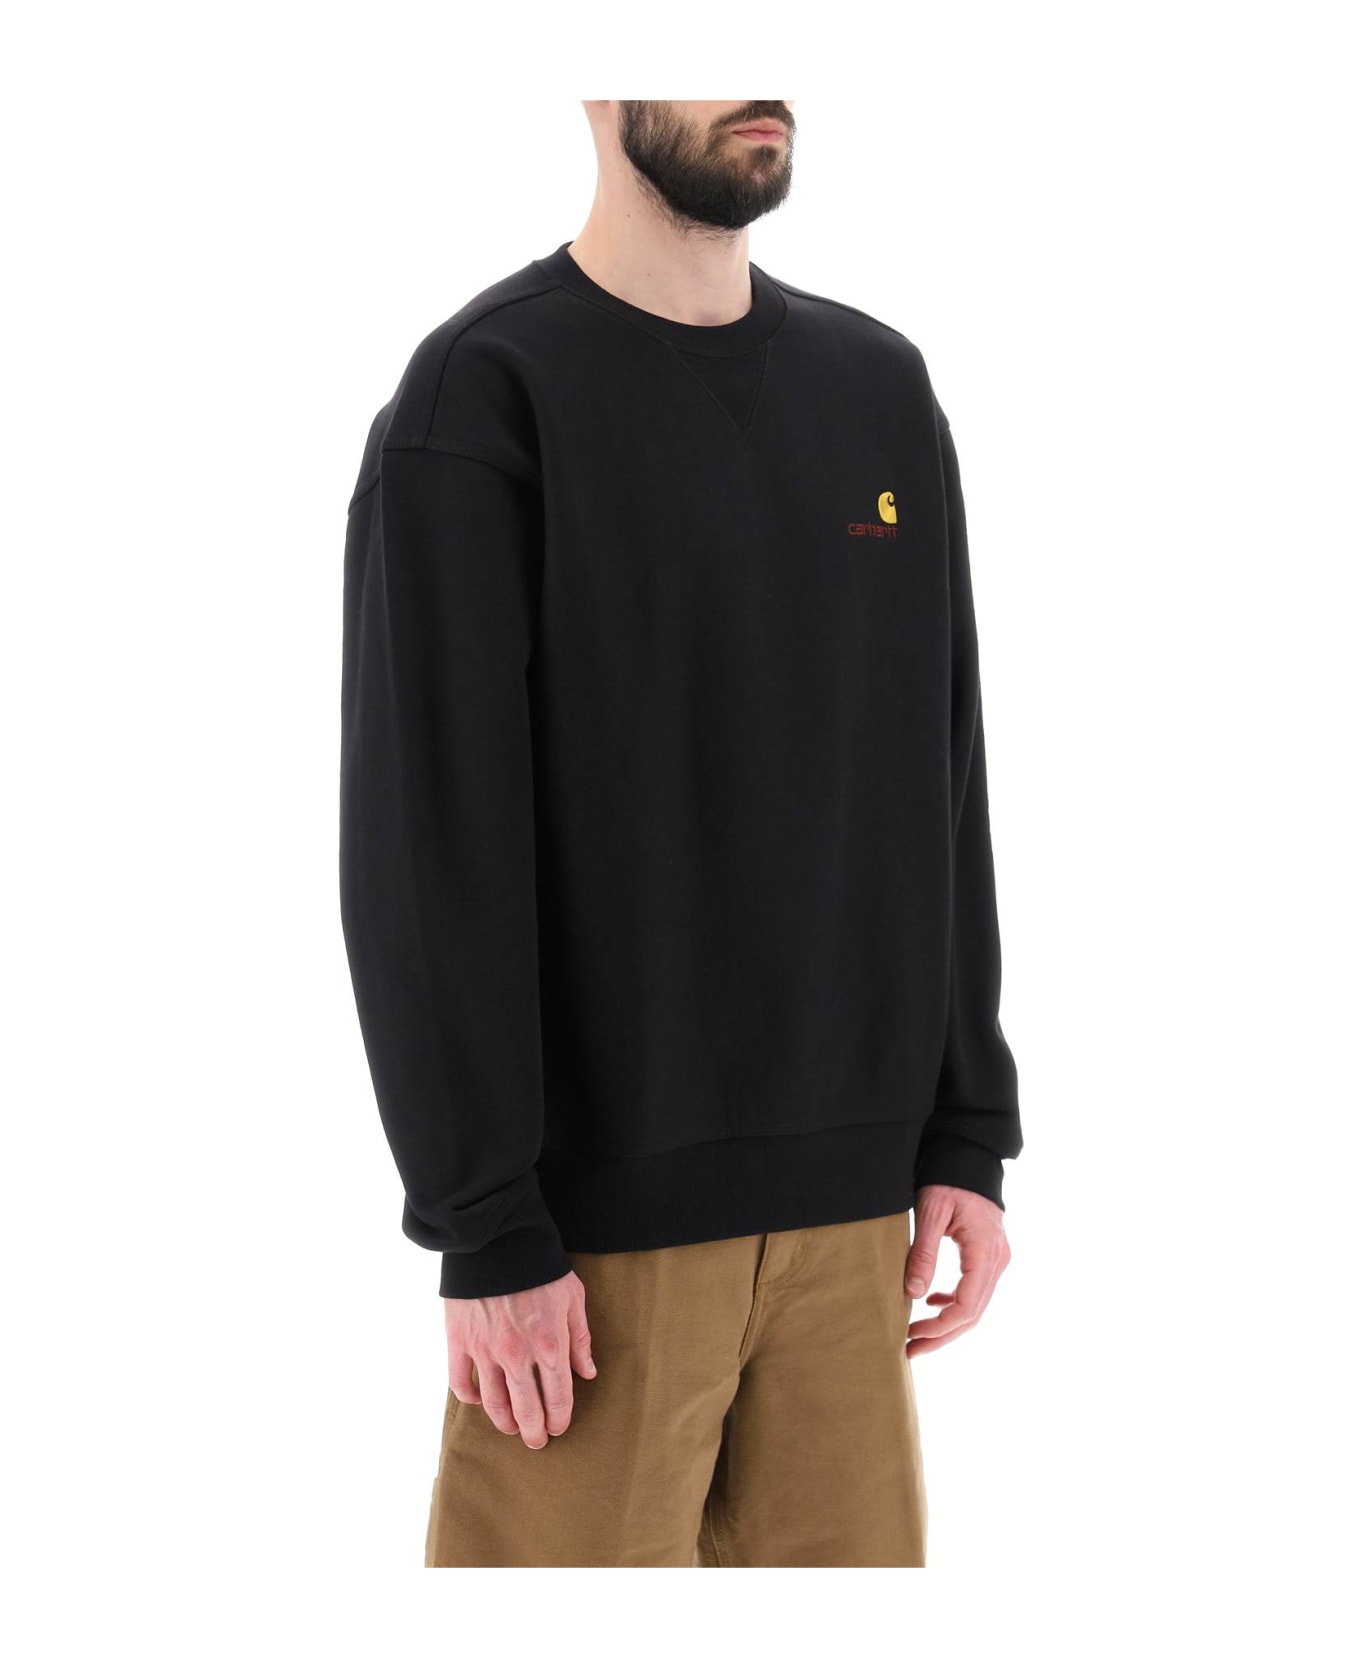 Carhartt Sweatshirt With Logo - BLACK